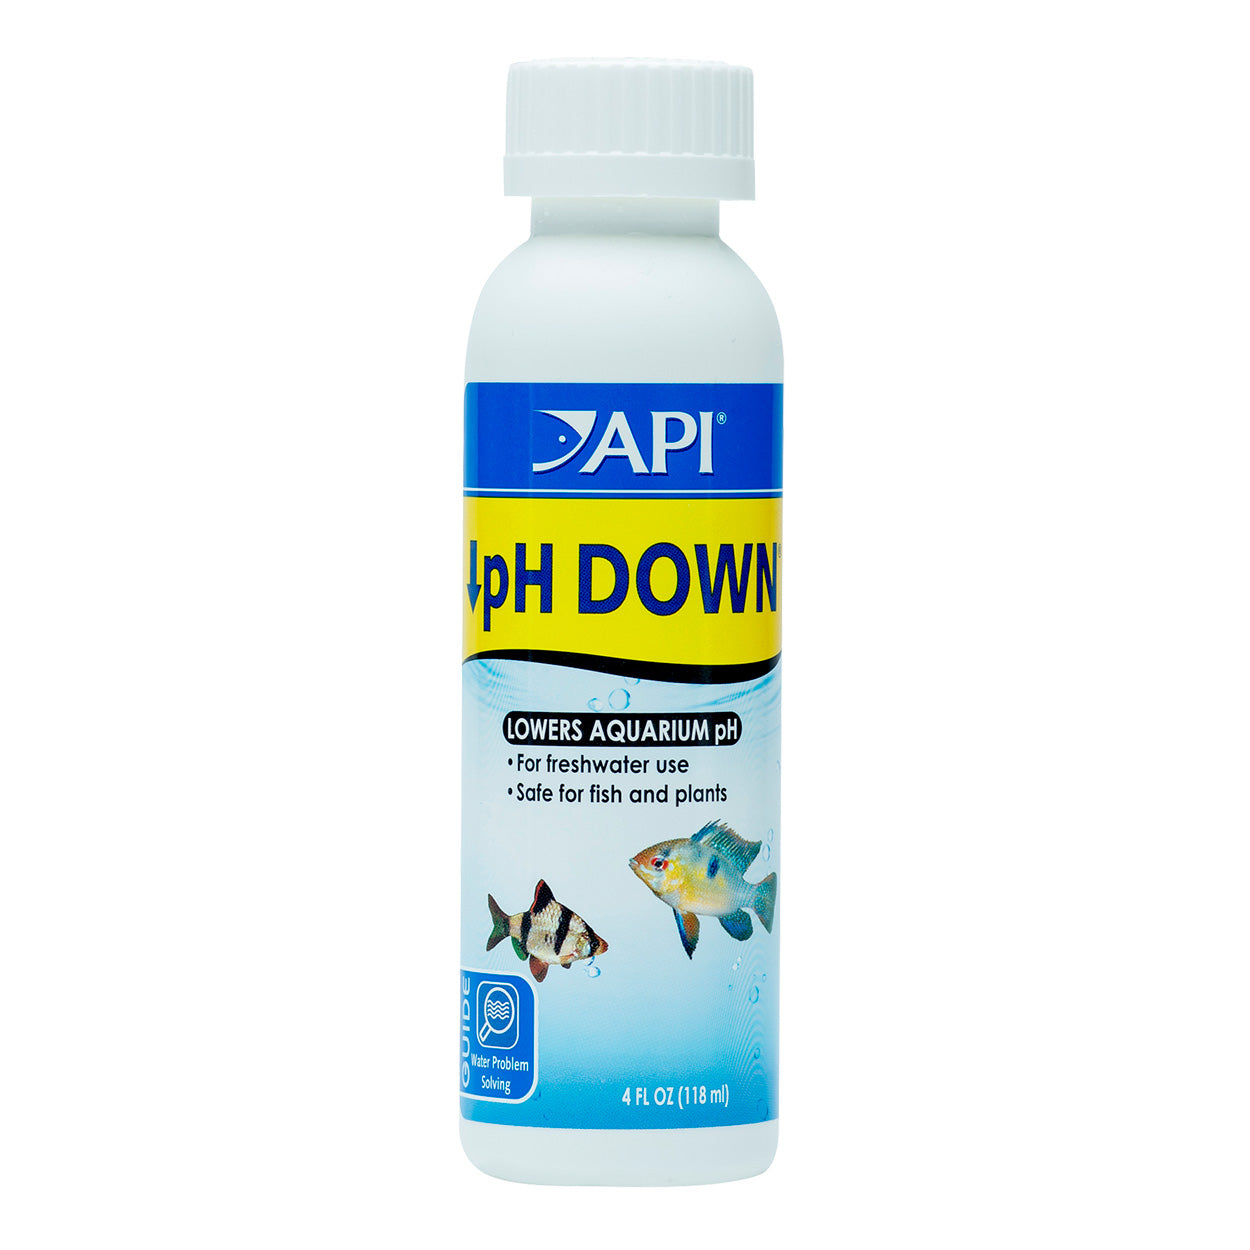 pH DOWN